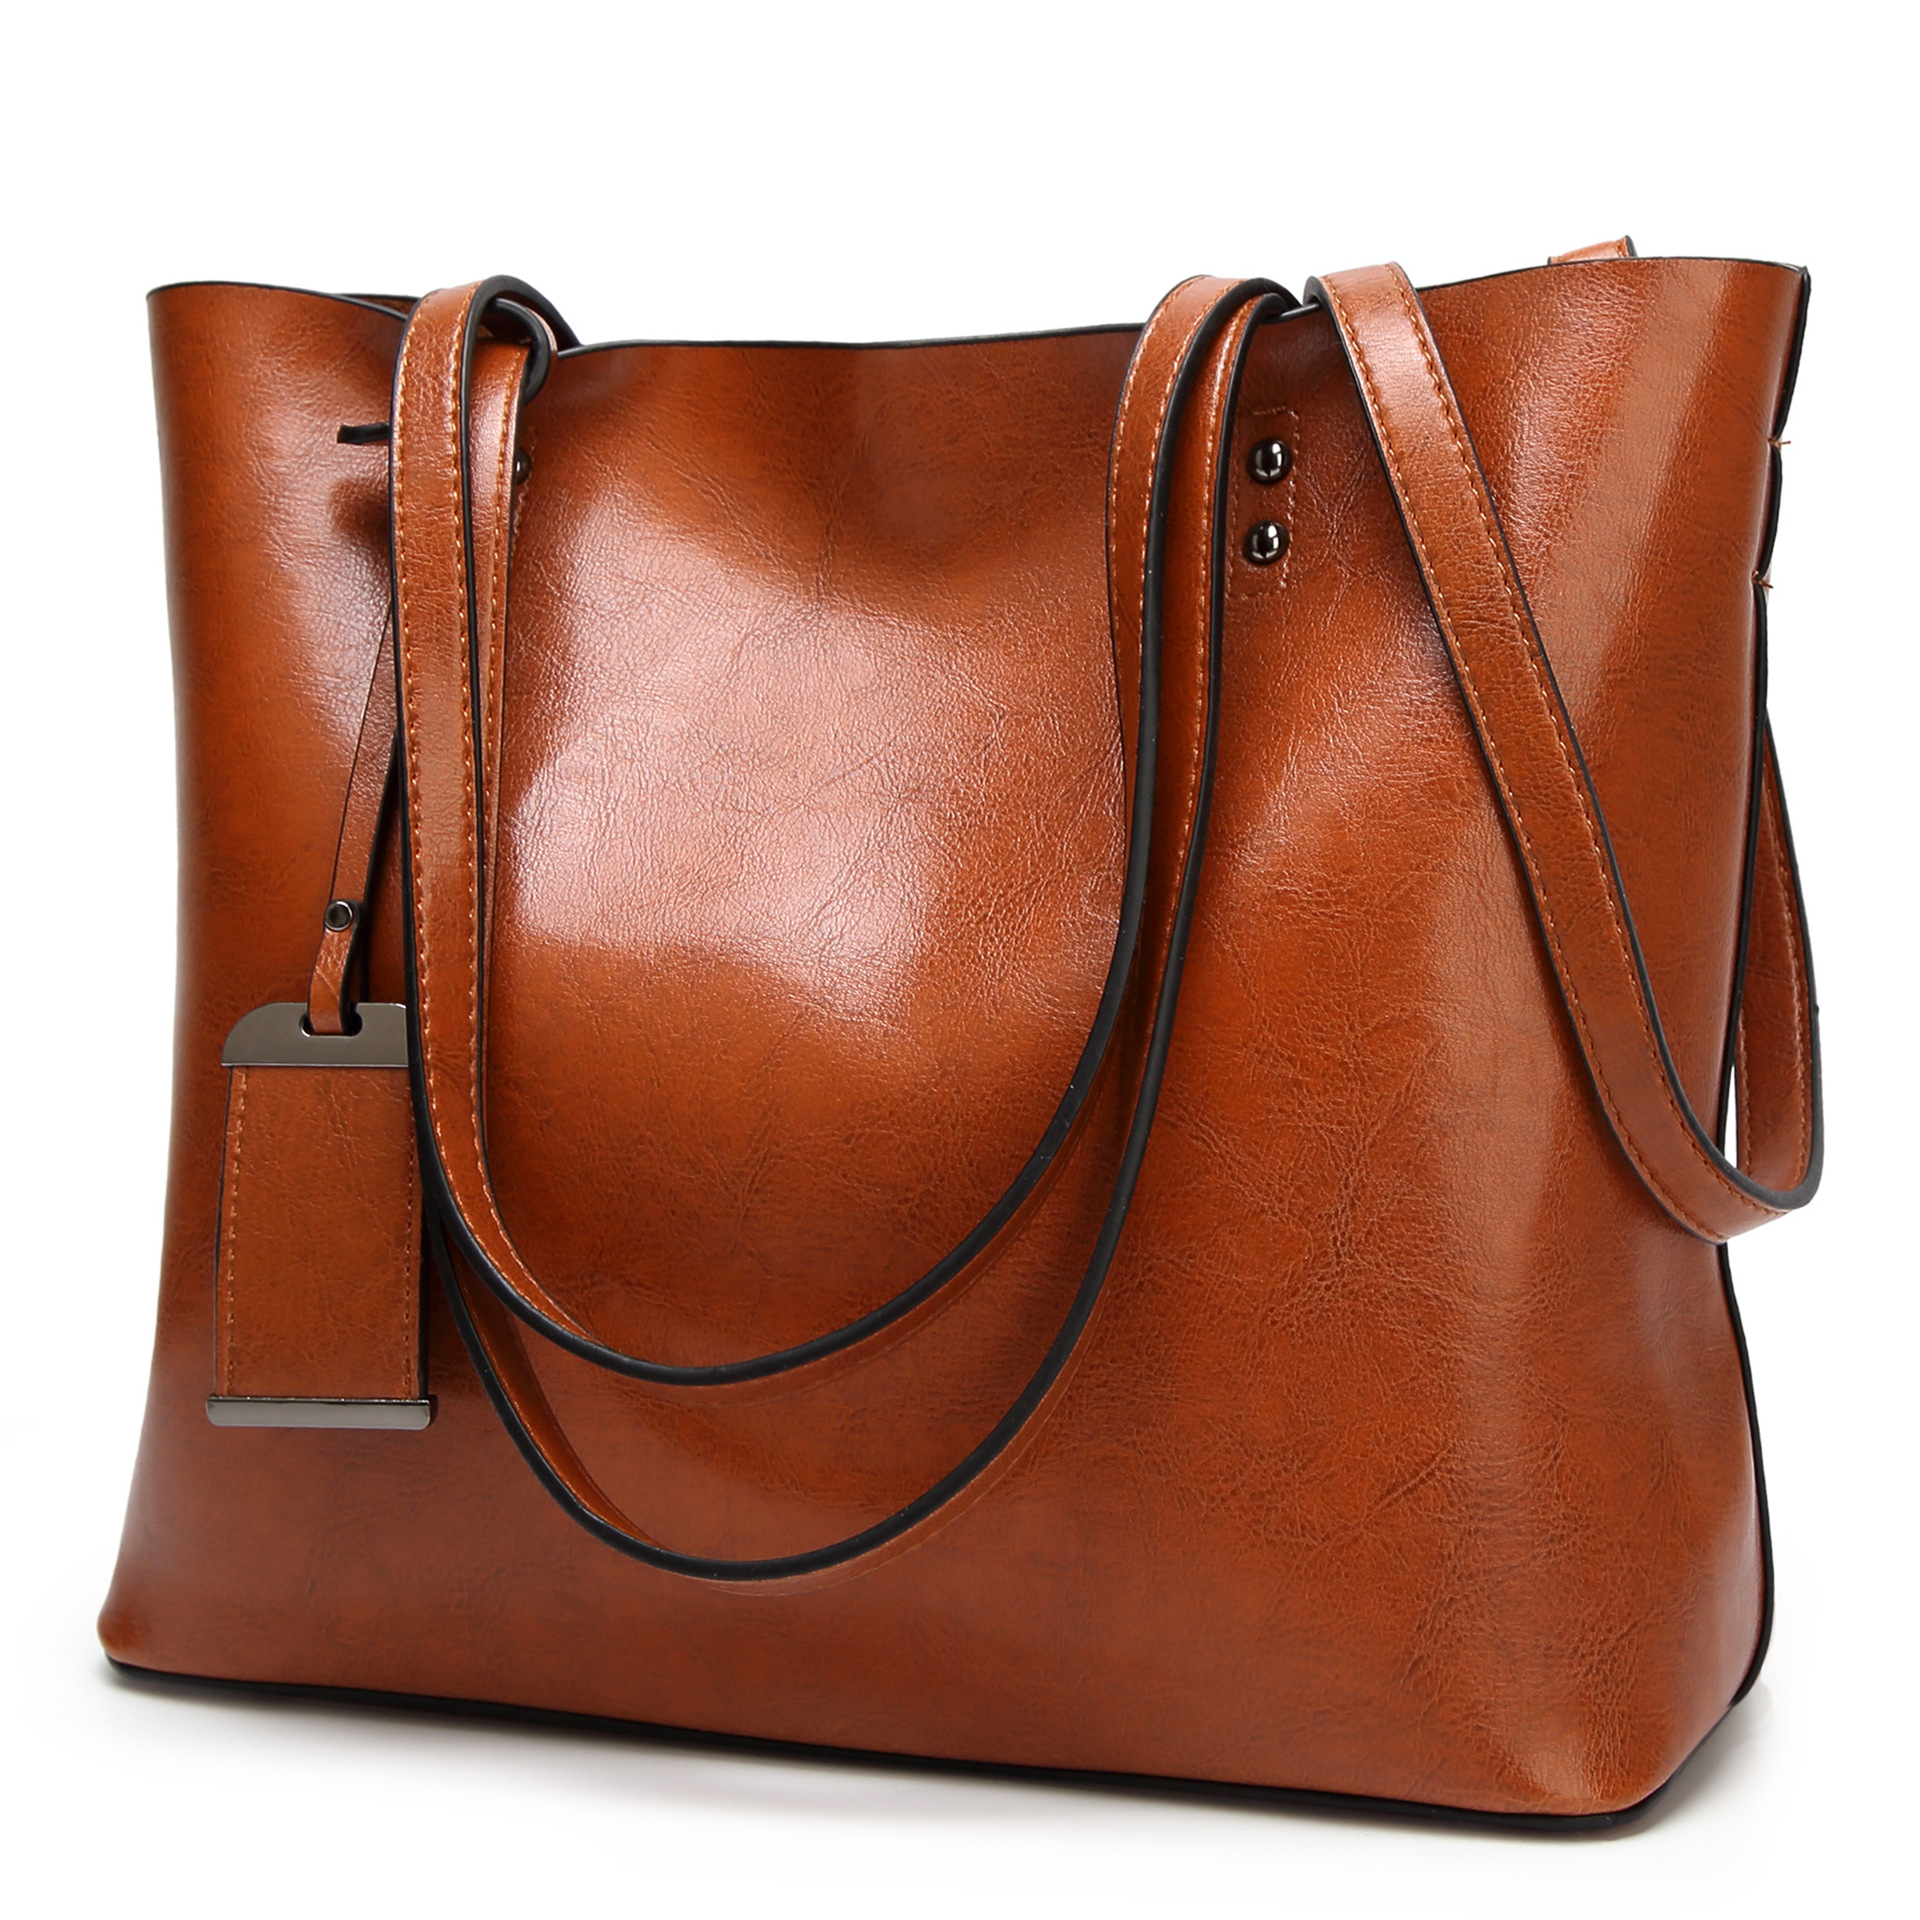  Women Large Soft Faux Leather Shoulder Bag Travel Tote